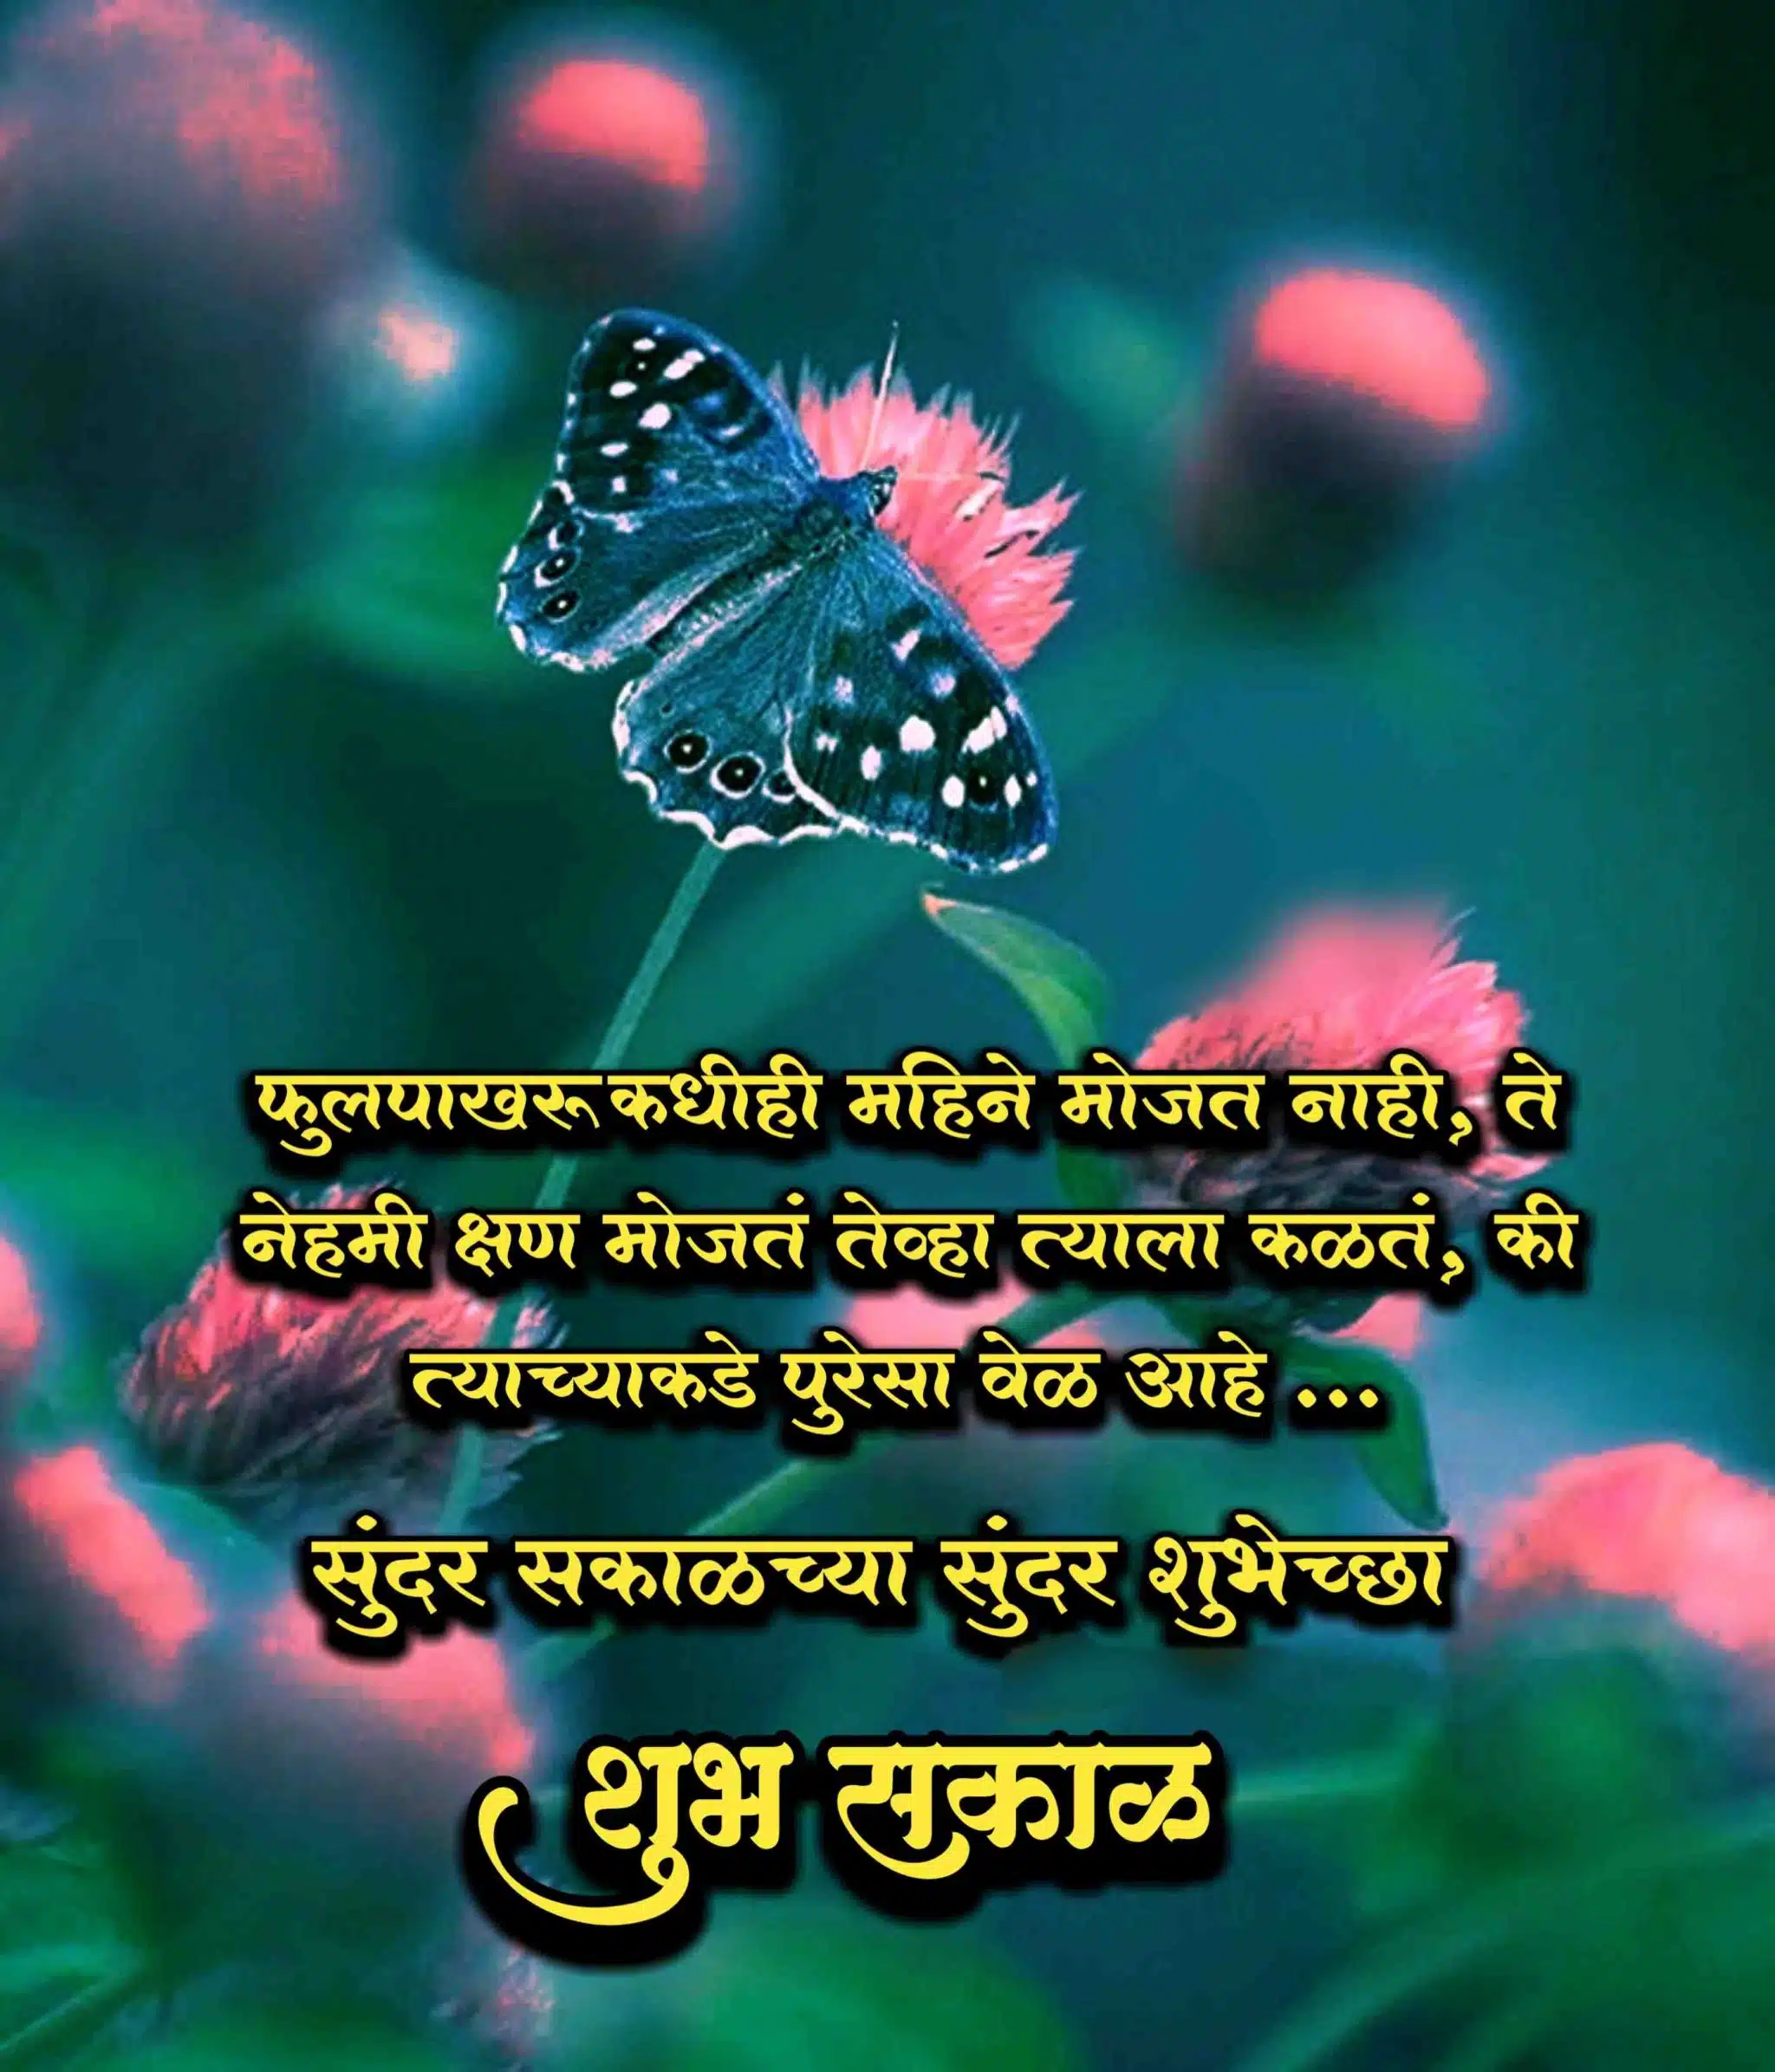 Happy Good Morning Quotes In Marathi